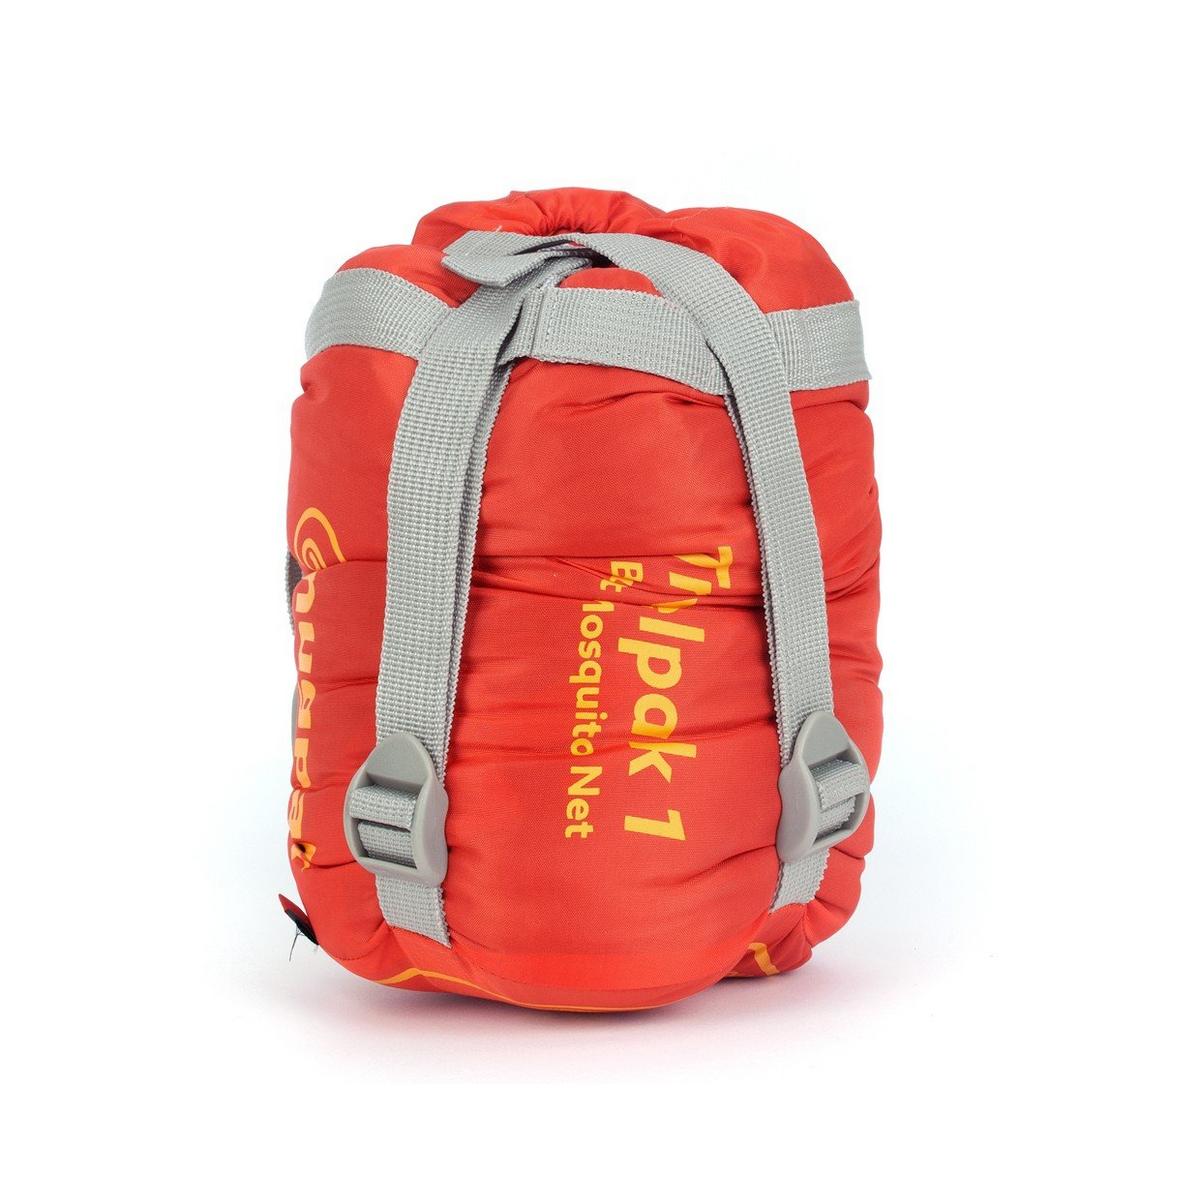 Snugpak Travelpak 1 Sleeping Bag - Red